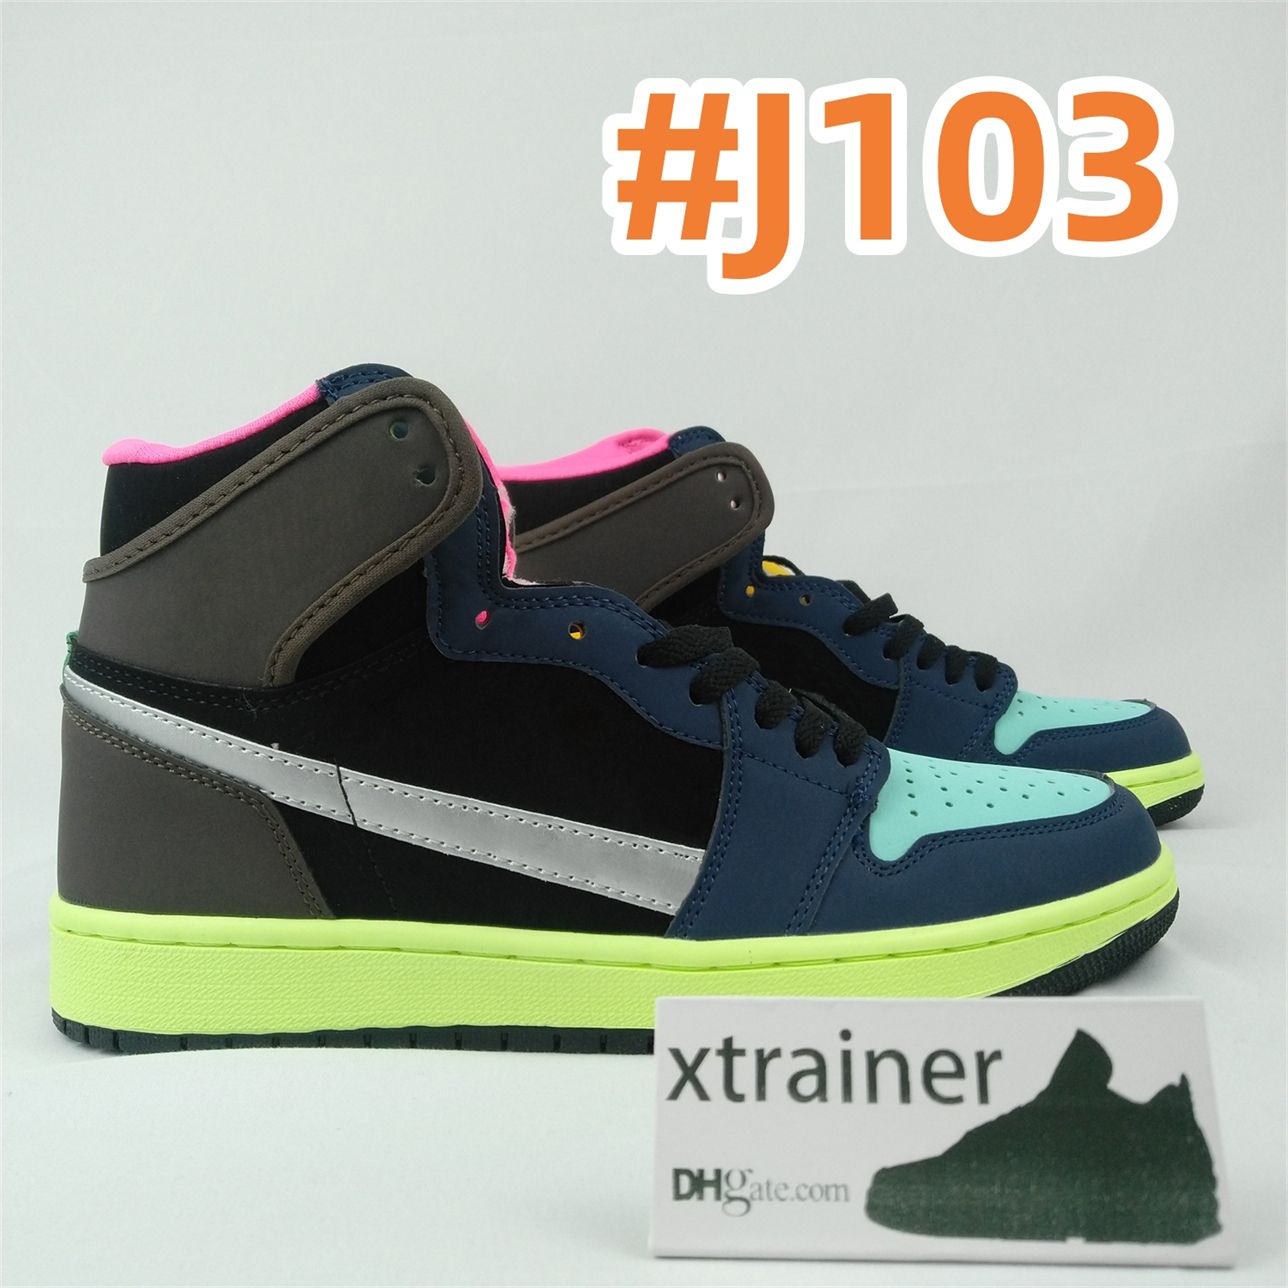 #J103